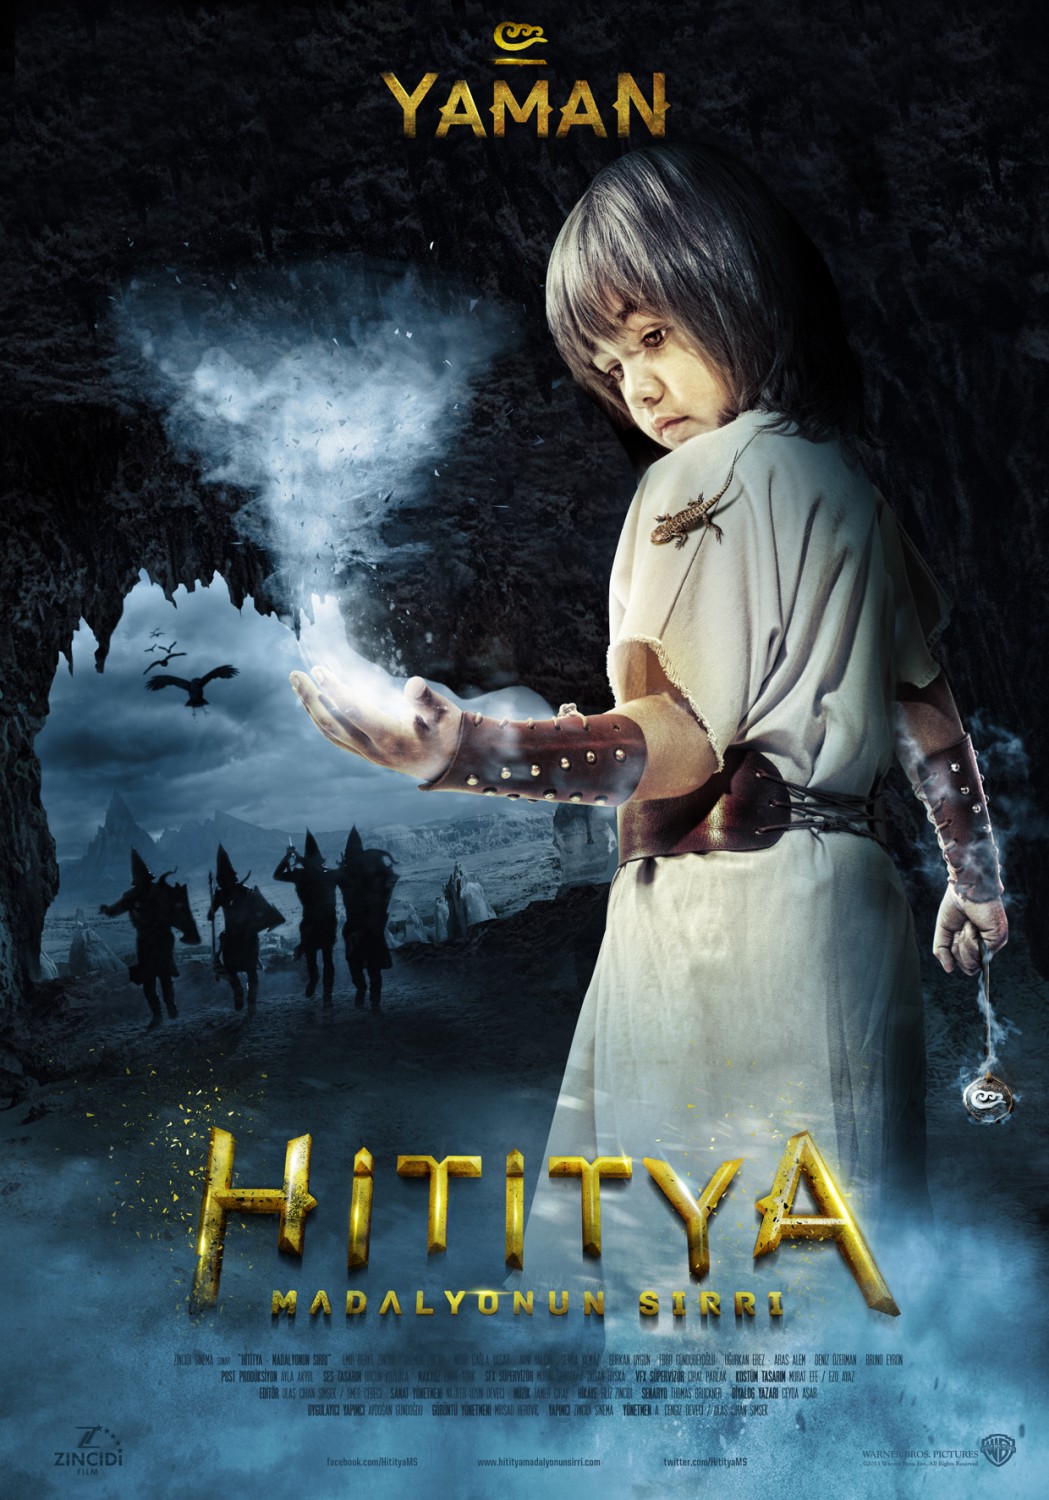 Extra Large Movie Poster Image for Hititya Madalyonun Sirri (#4 of 6)